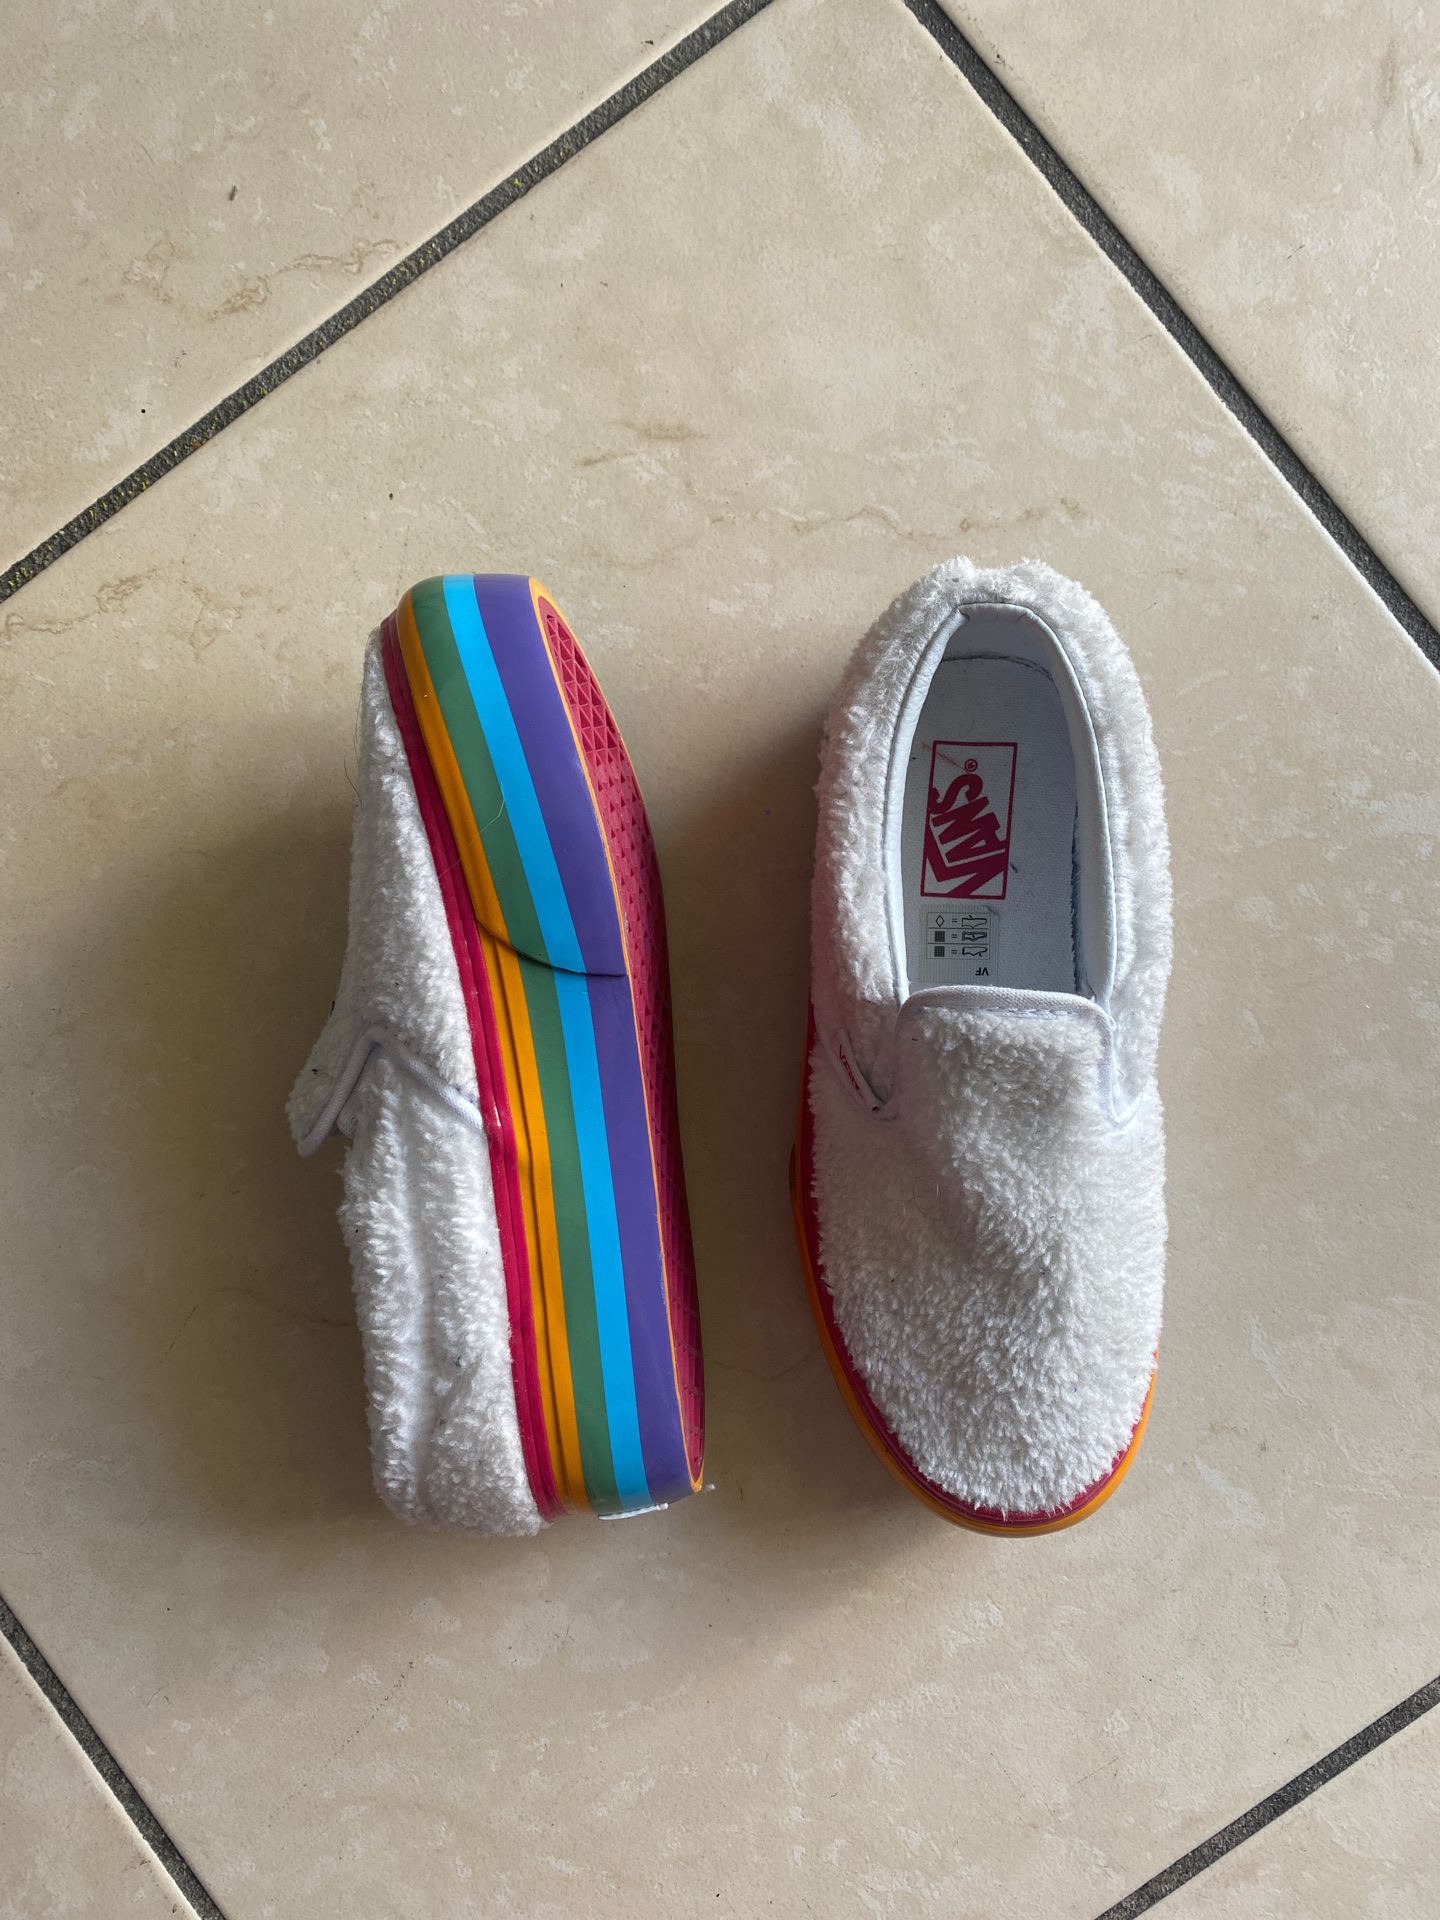 Vans kids shoes - size 13.5 - never worn - Miami Beach